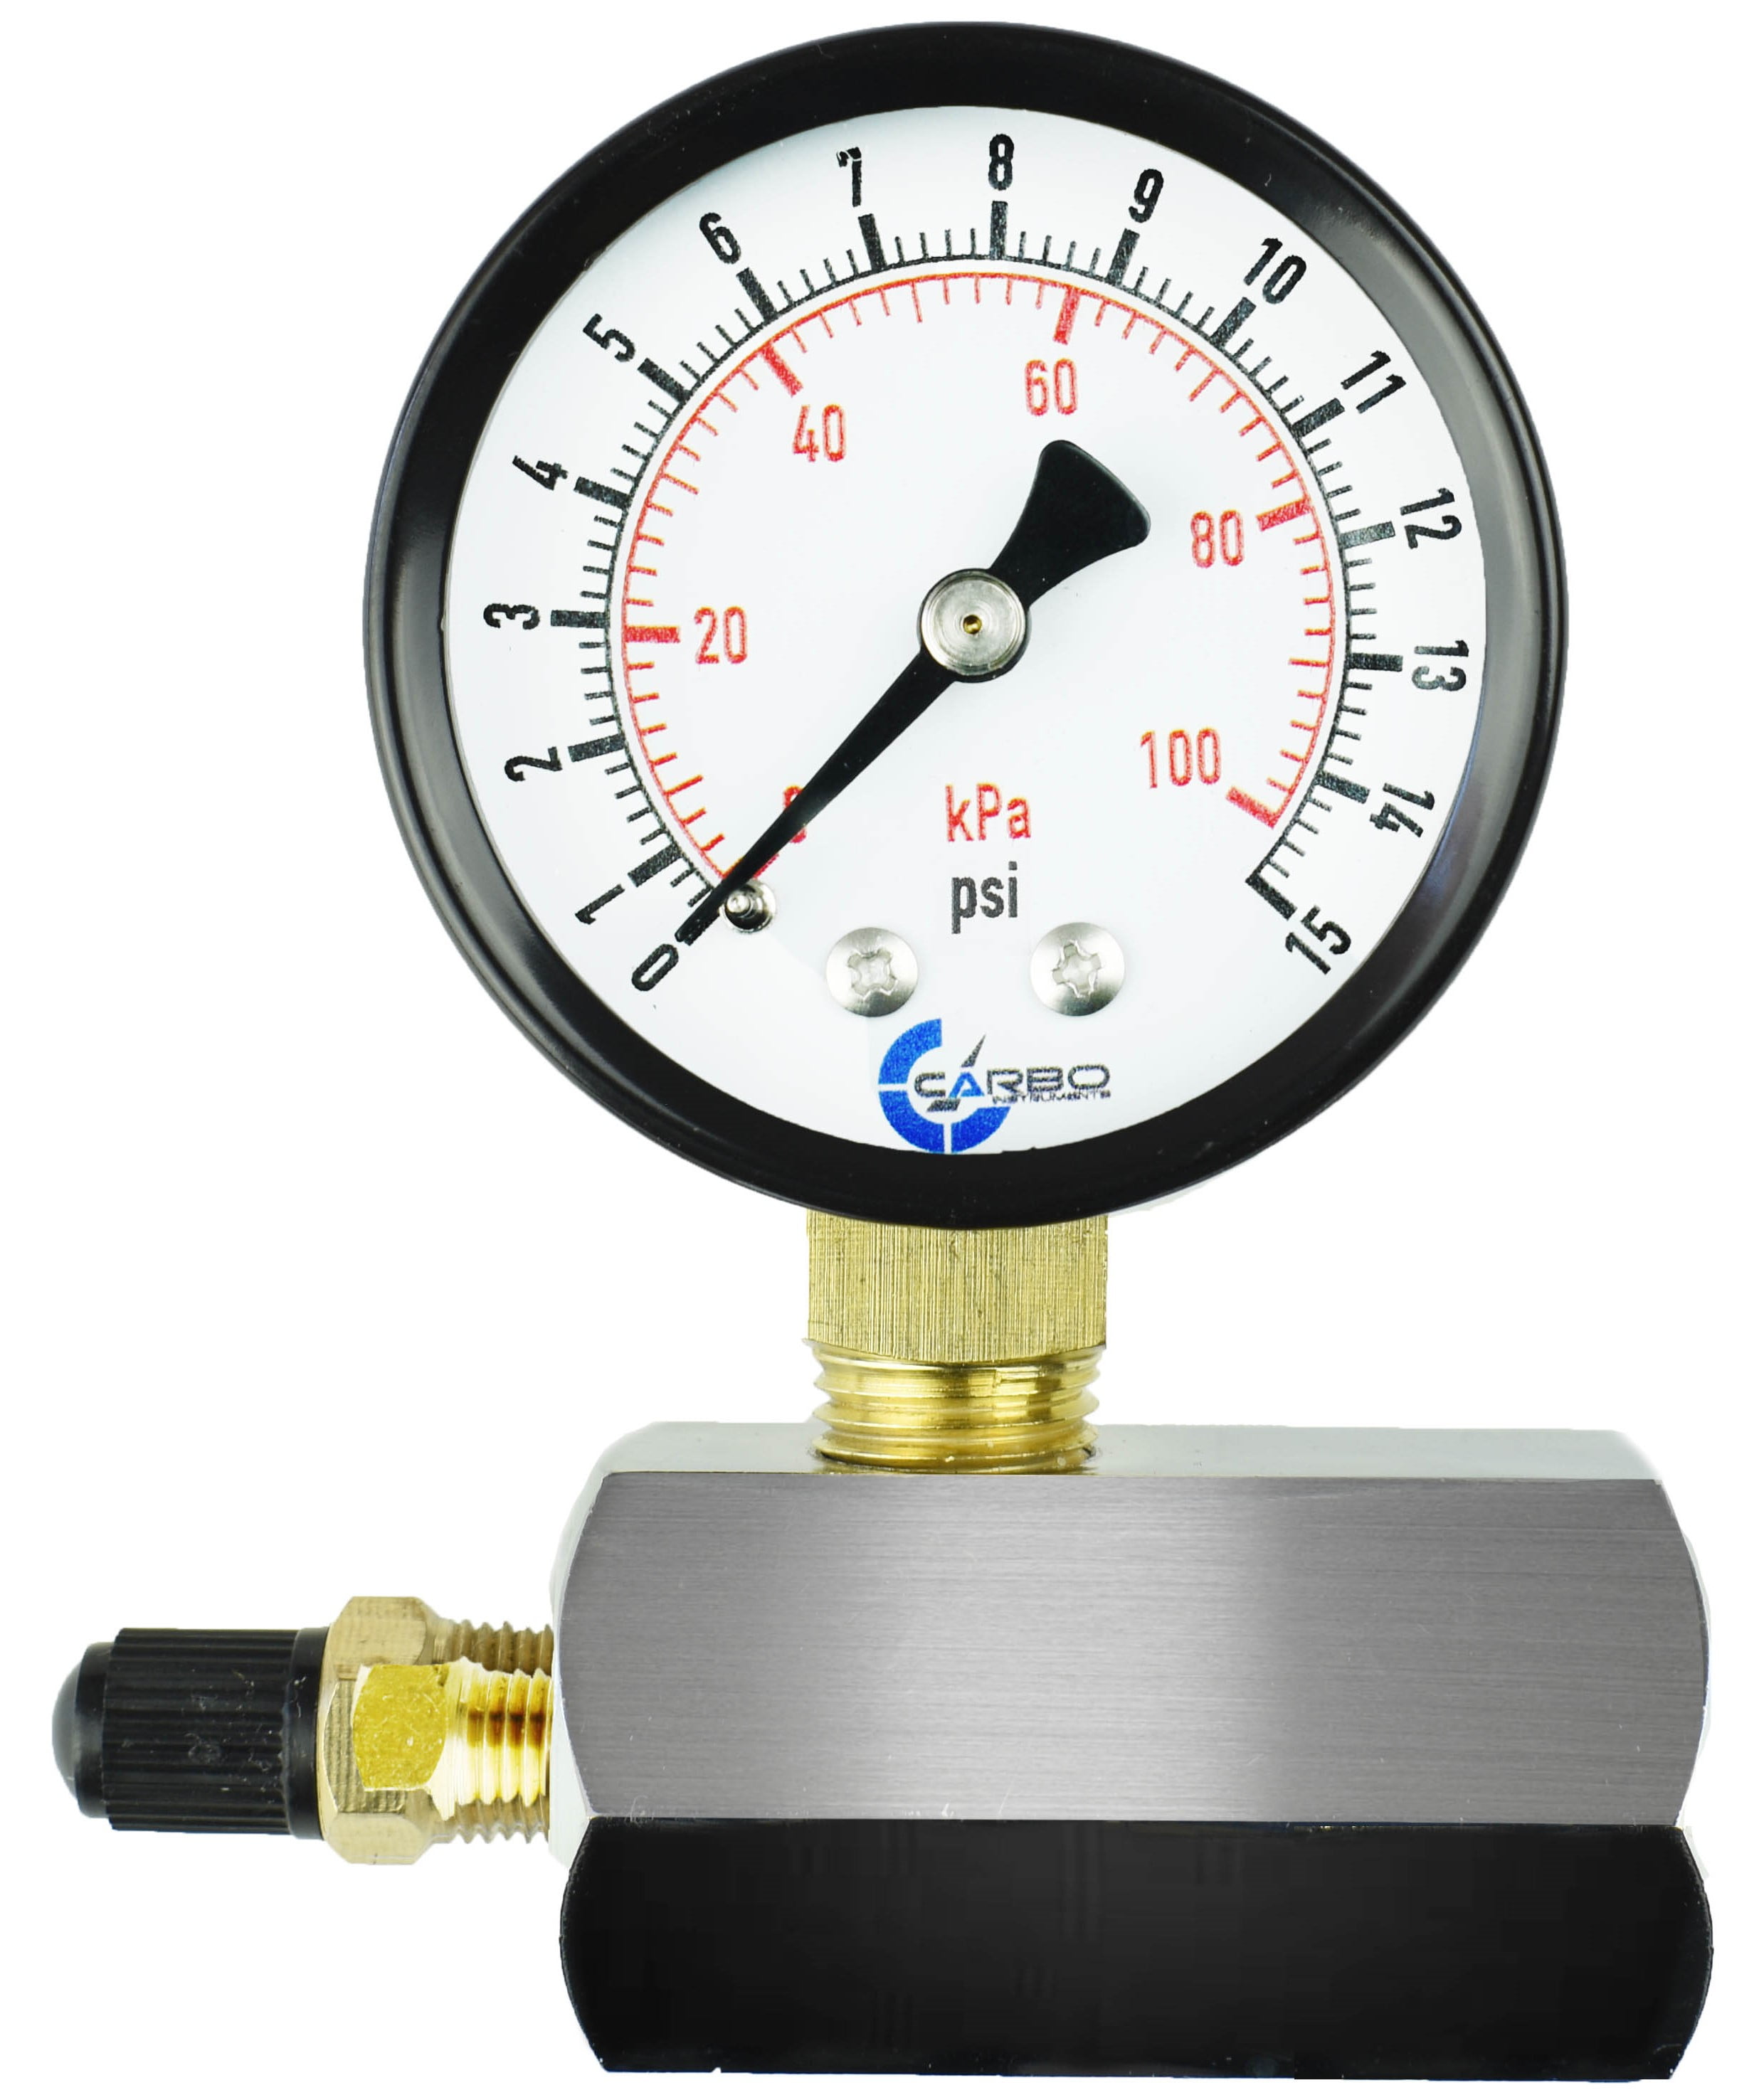 Gas Test Pressure Gauge 15 Pound 15 PSI 100 kPa 3/4” FNPT Connection Assymbly 